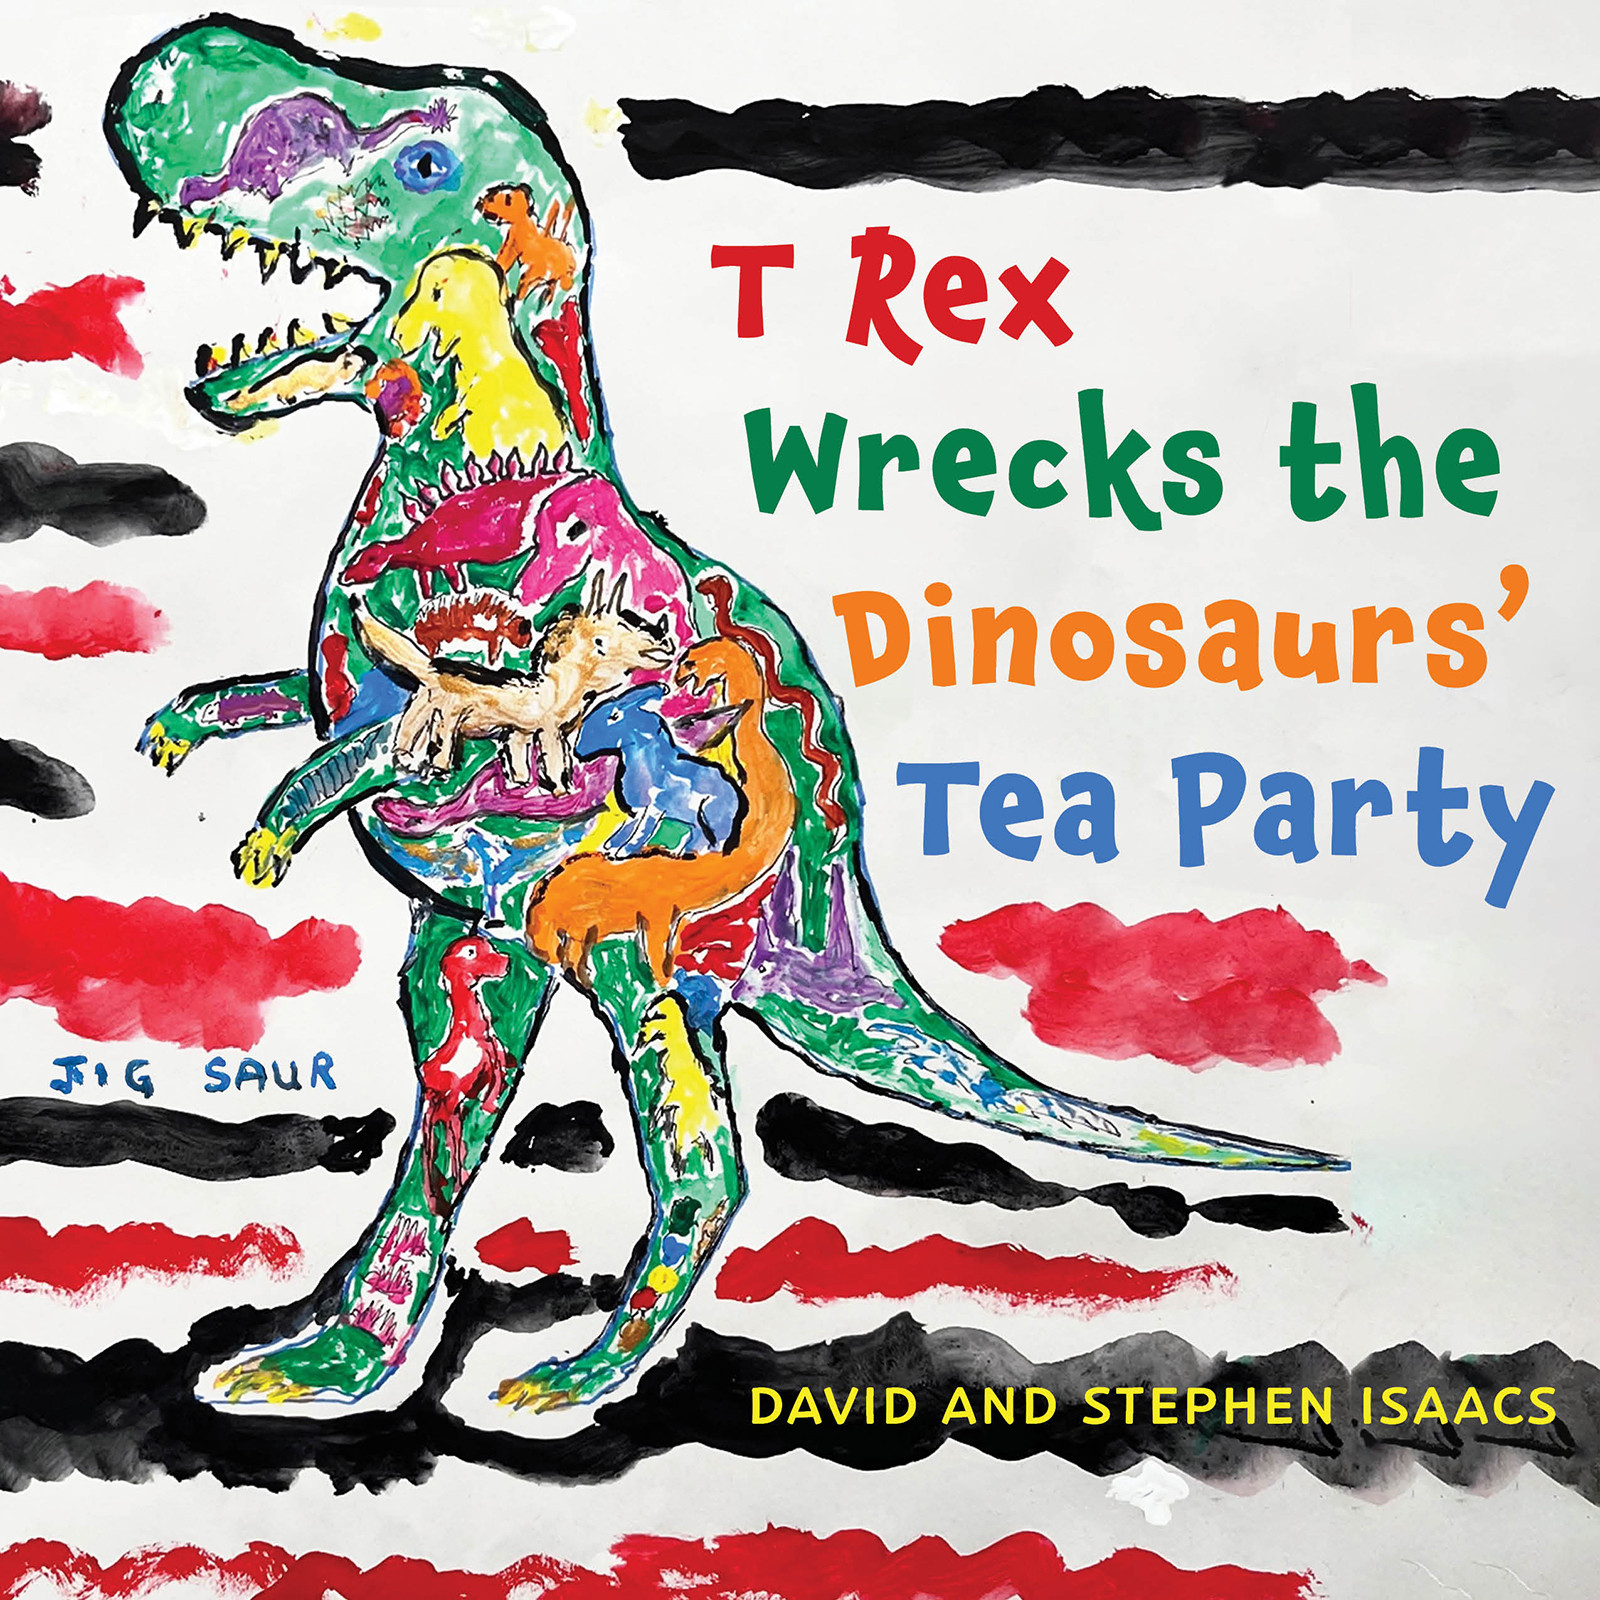 T Rex Wrecks the Dinosaurs’ Tea Party